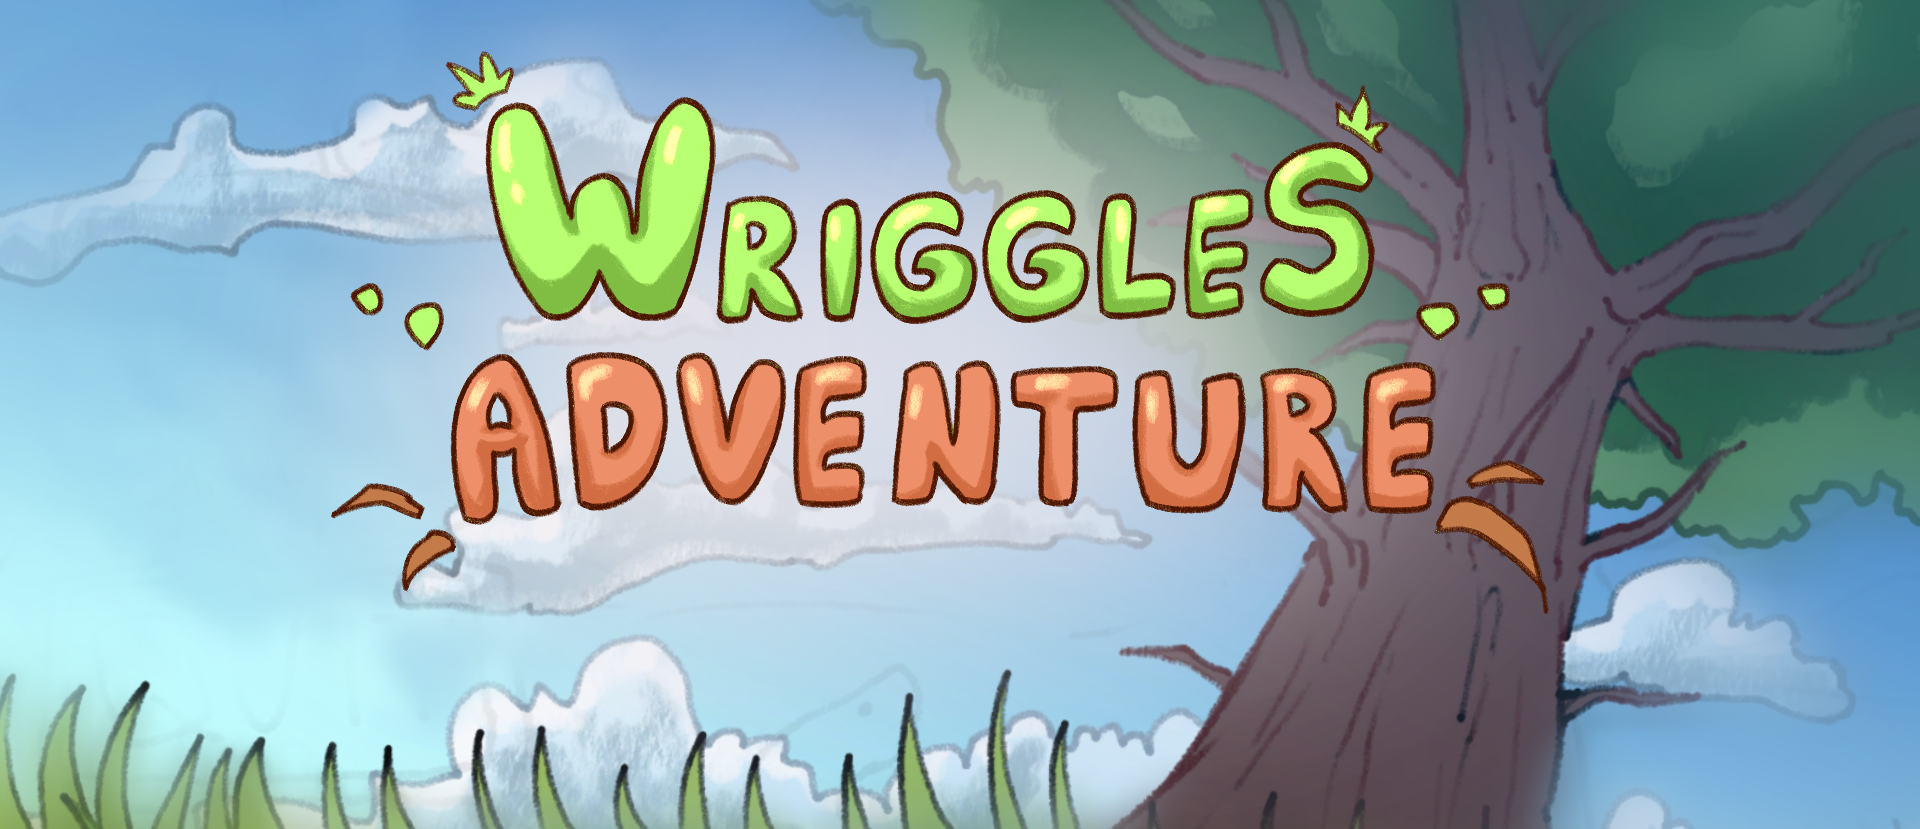 Wriggles Adventure